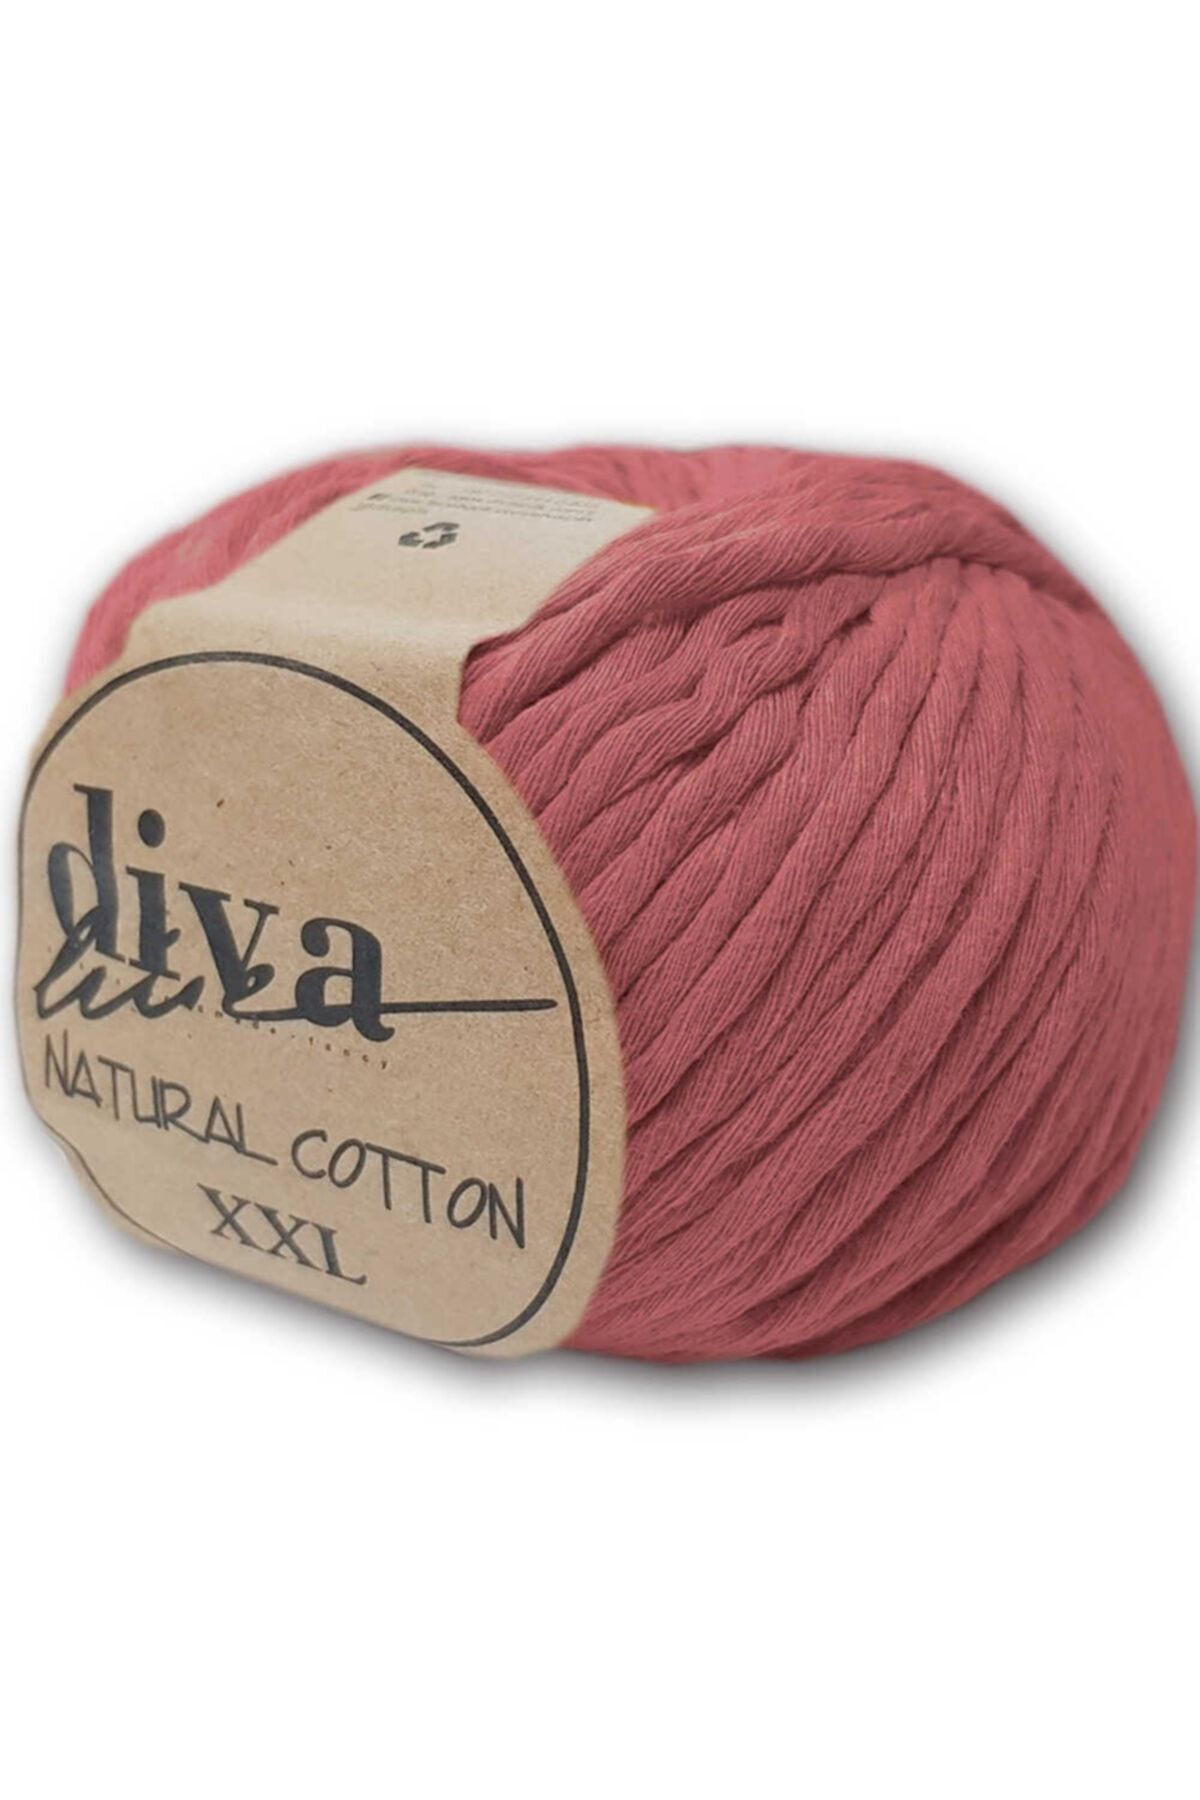 Diva İplik Diva Natural Cotton Xxl 1005